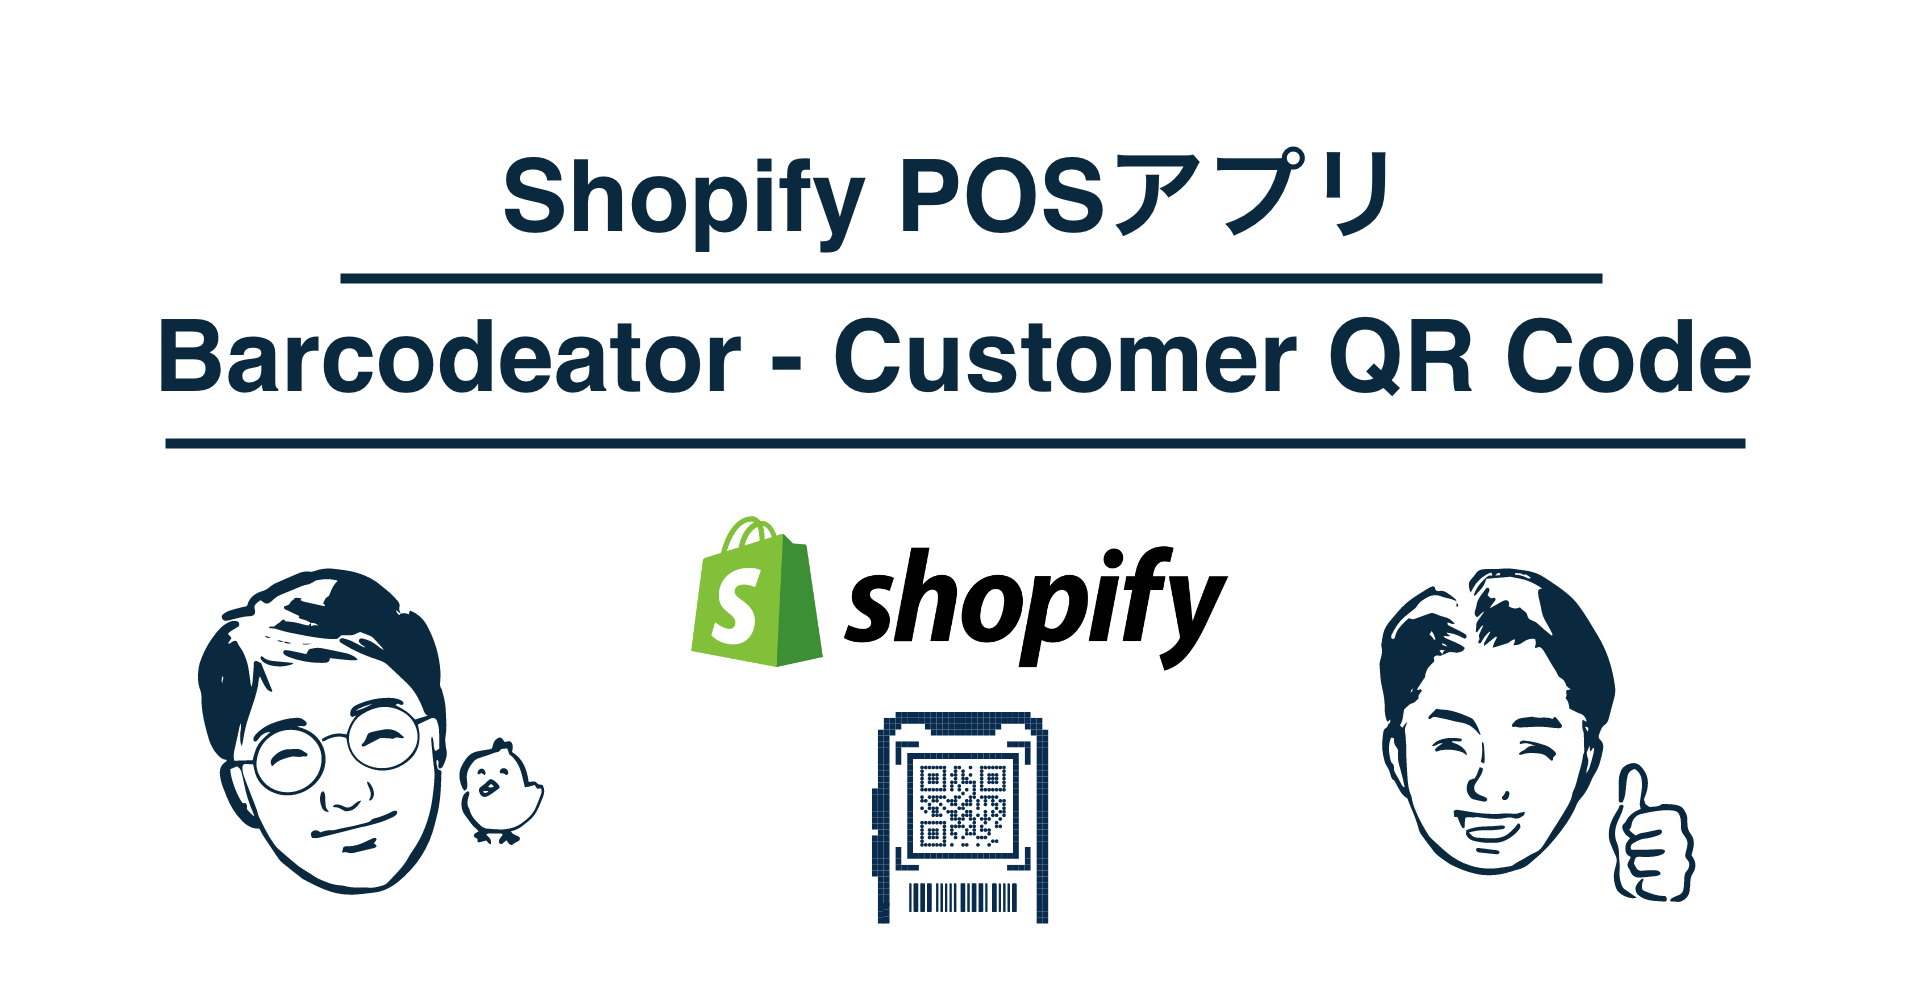 Shopify POSアプリBarcodeator ‑ Customer QR Code